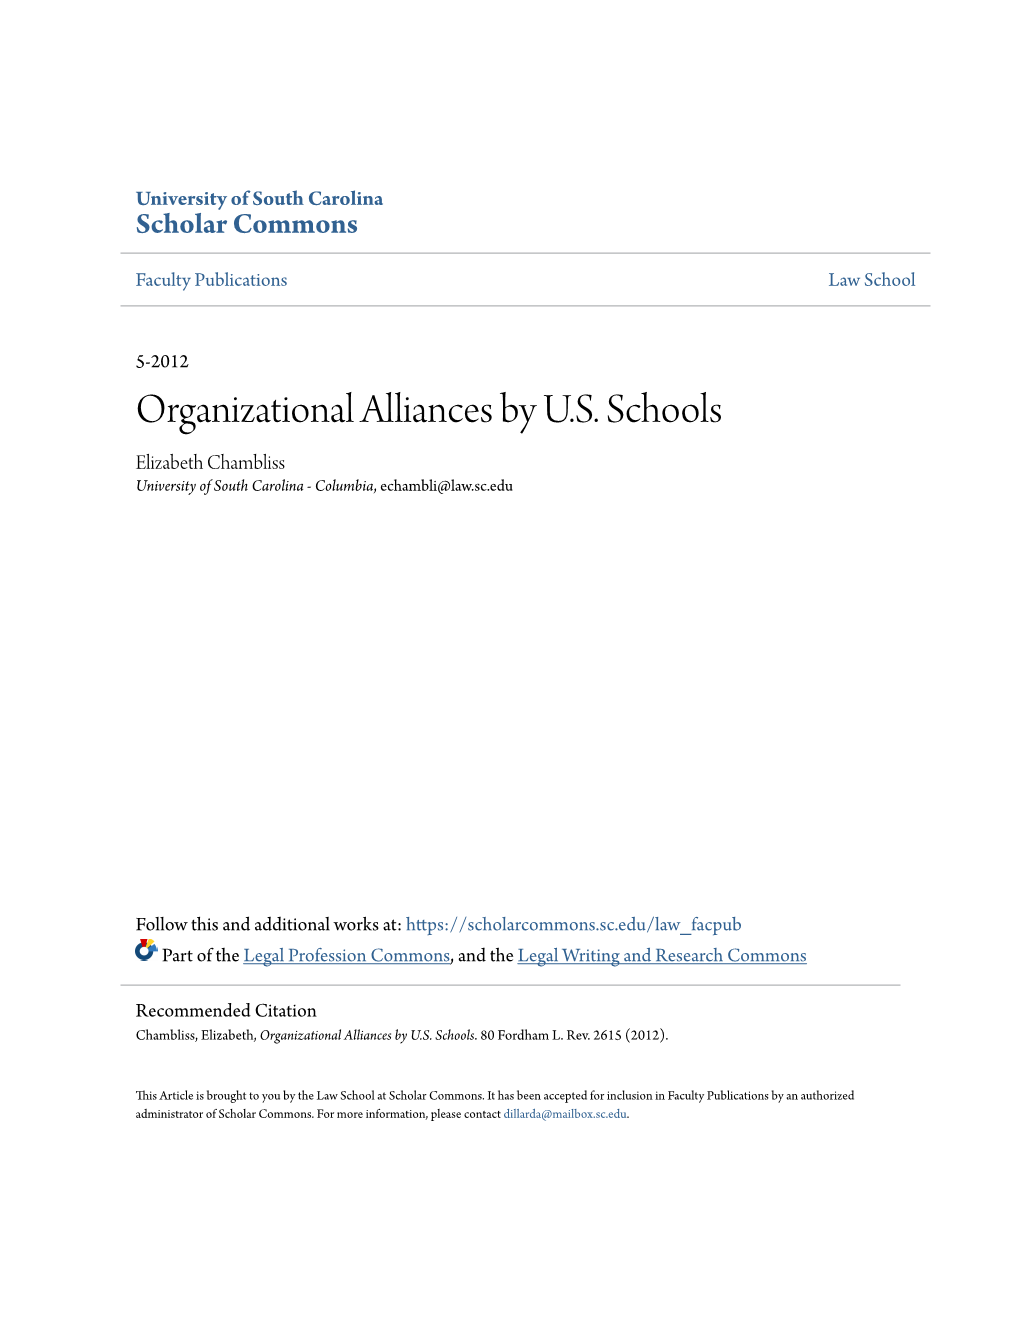 Organizational Alliances by U.S. Schools Elizabeth Chambliss University of South Carolina - Columbia, Echambli@Law.Sc.Edu